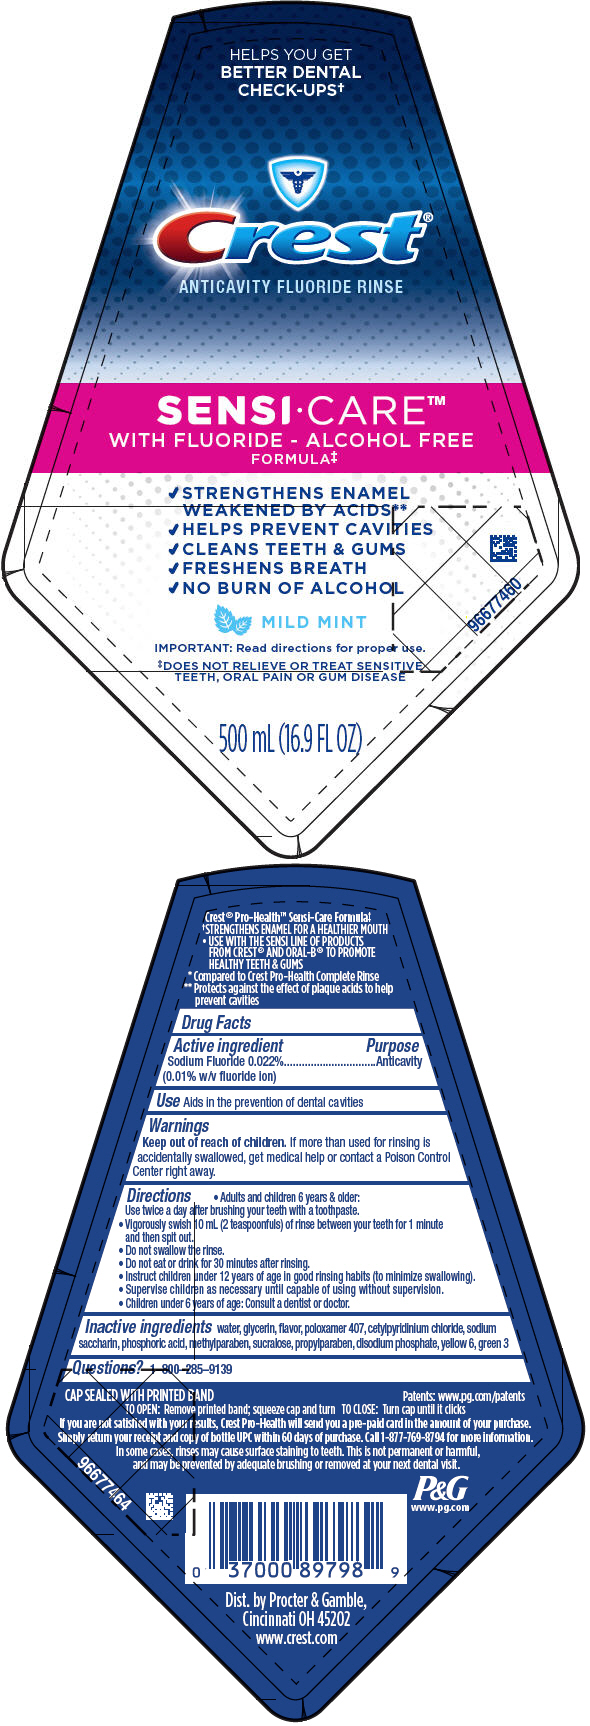 PRINCIPAL DISPLAY PANEL - 500 mL Bottle Label